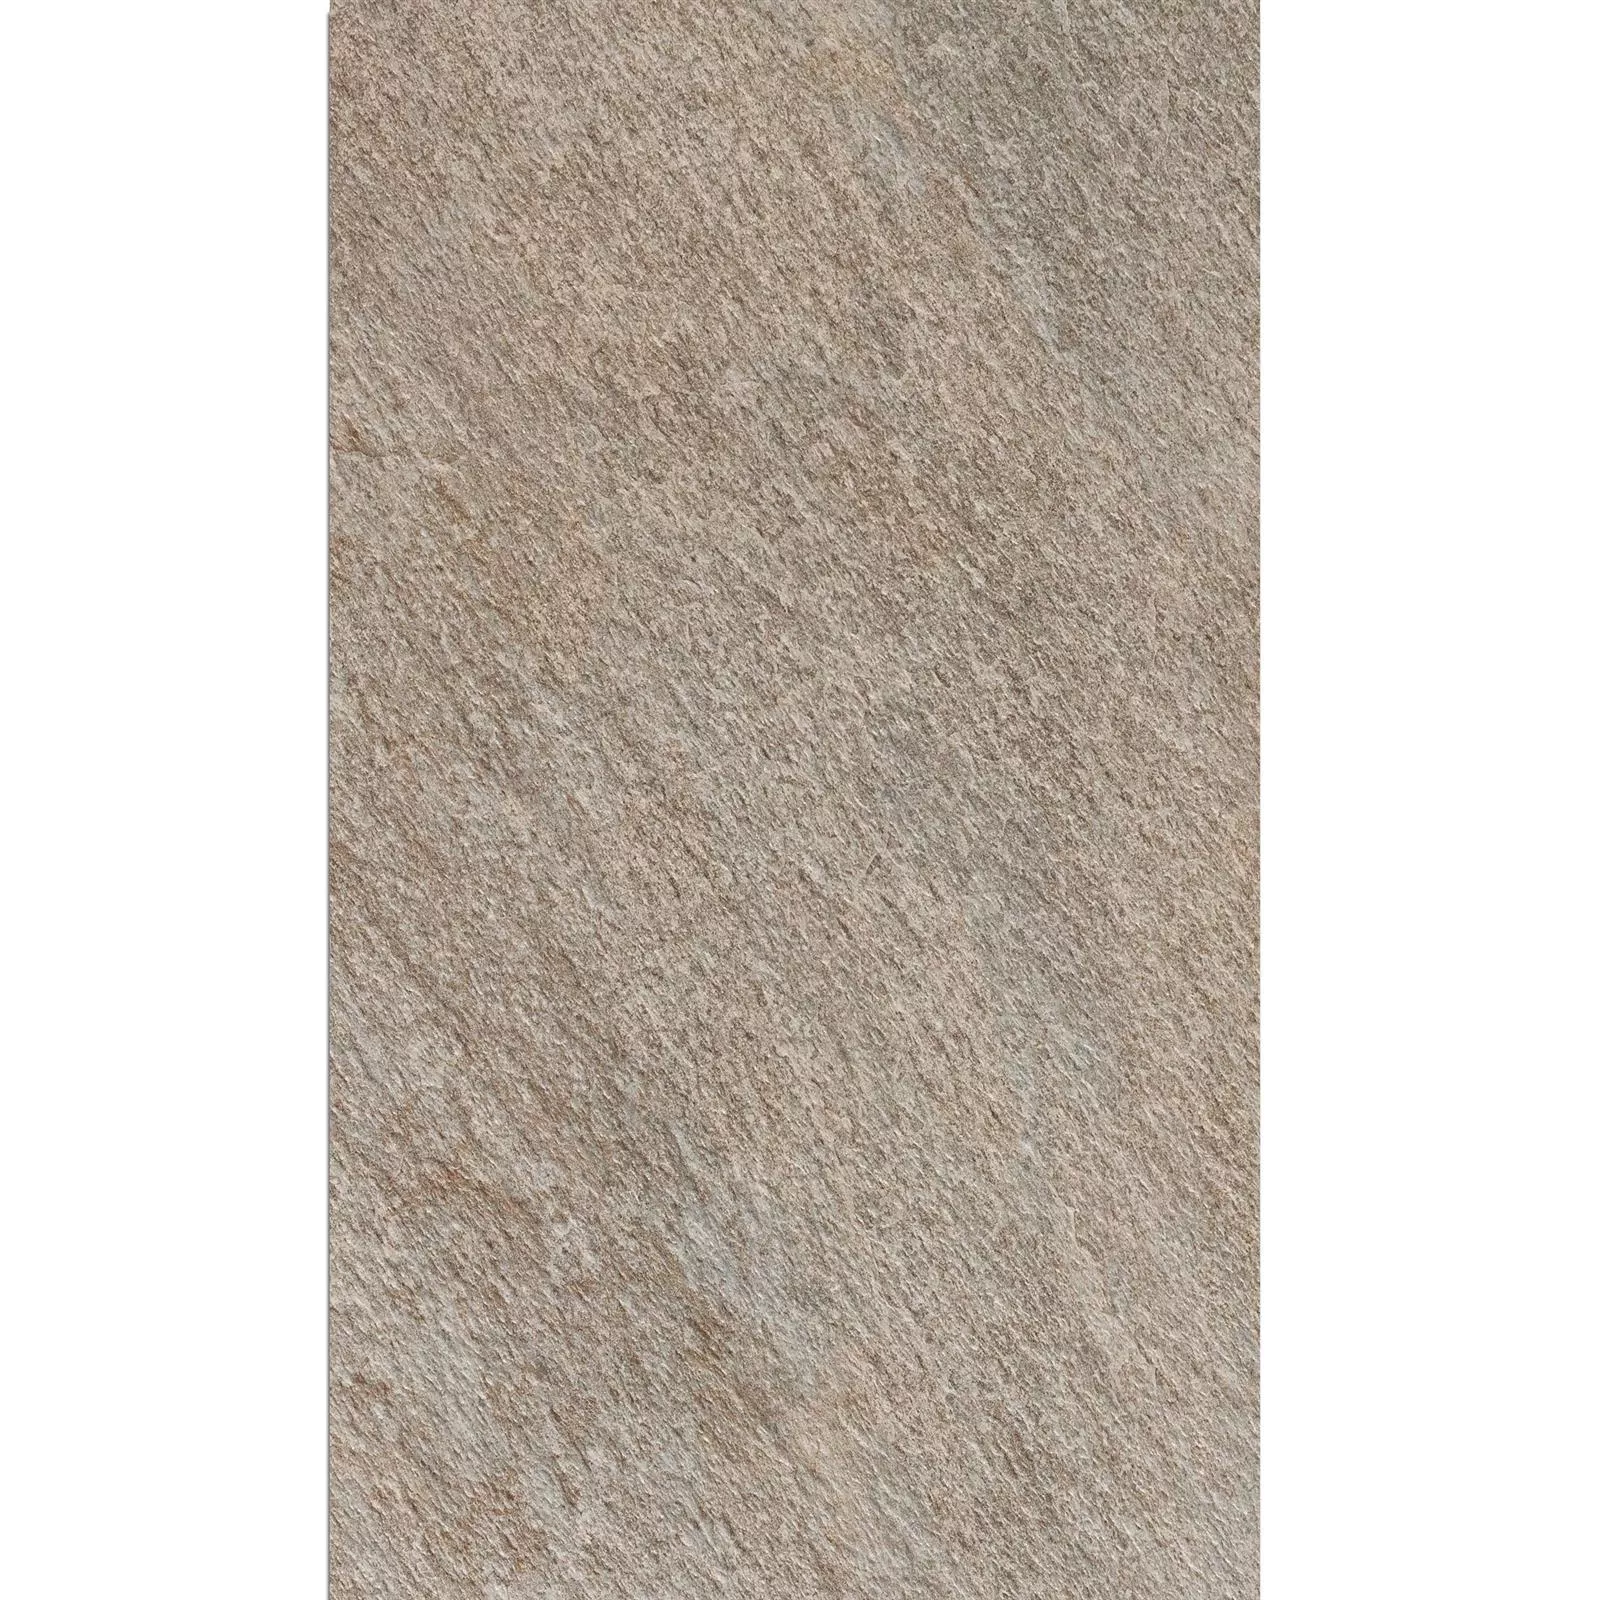 Lajes de Terraço Stoneway Aparência De Pedra Natural Cinza 60x90cm